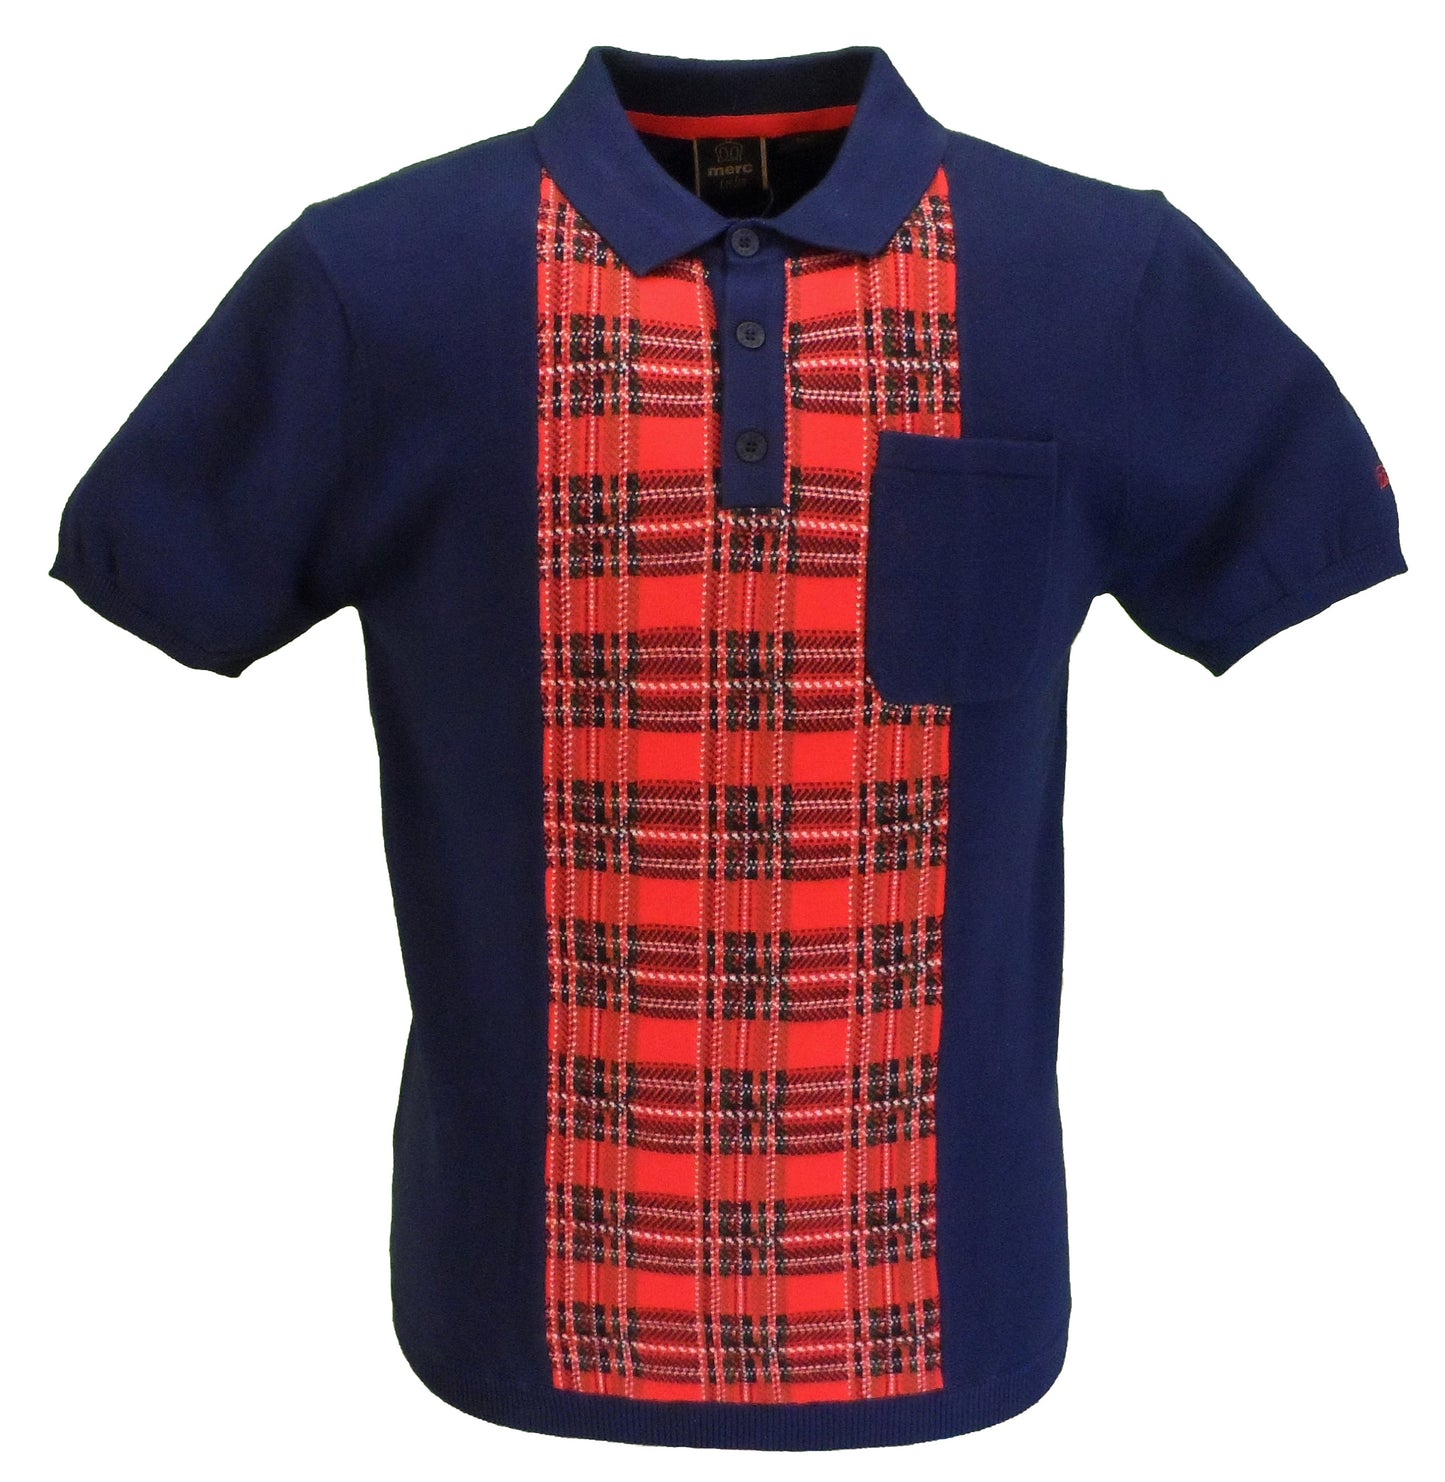 Merc Luna Navy Knitted Vintage Mod Polo Shirts